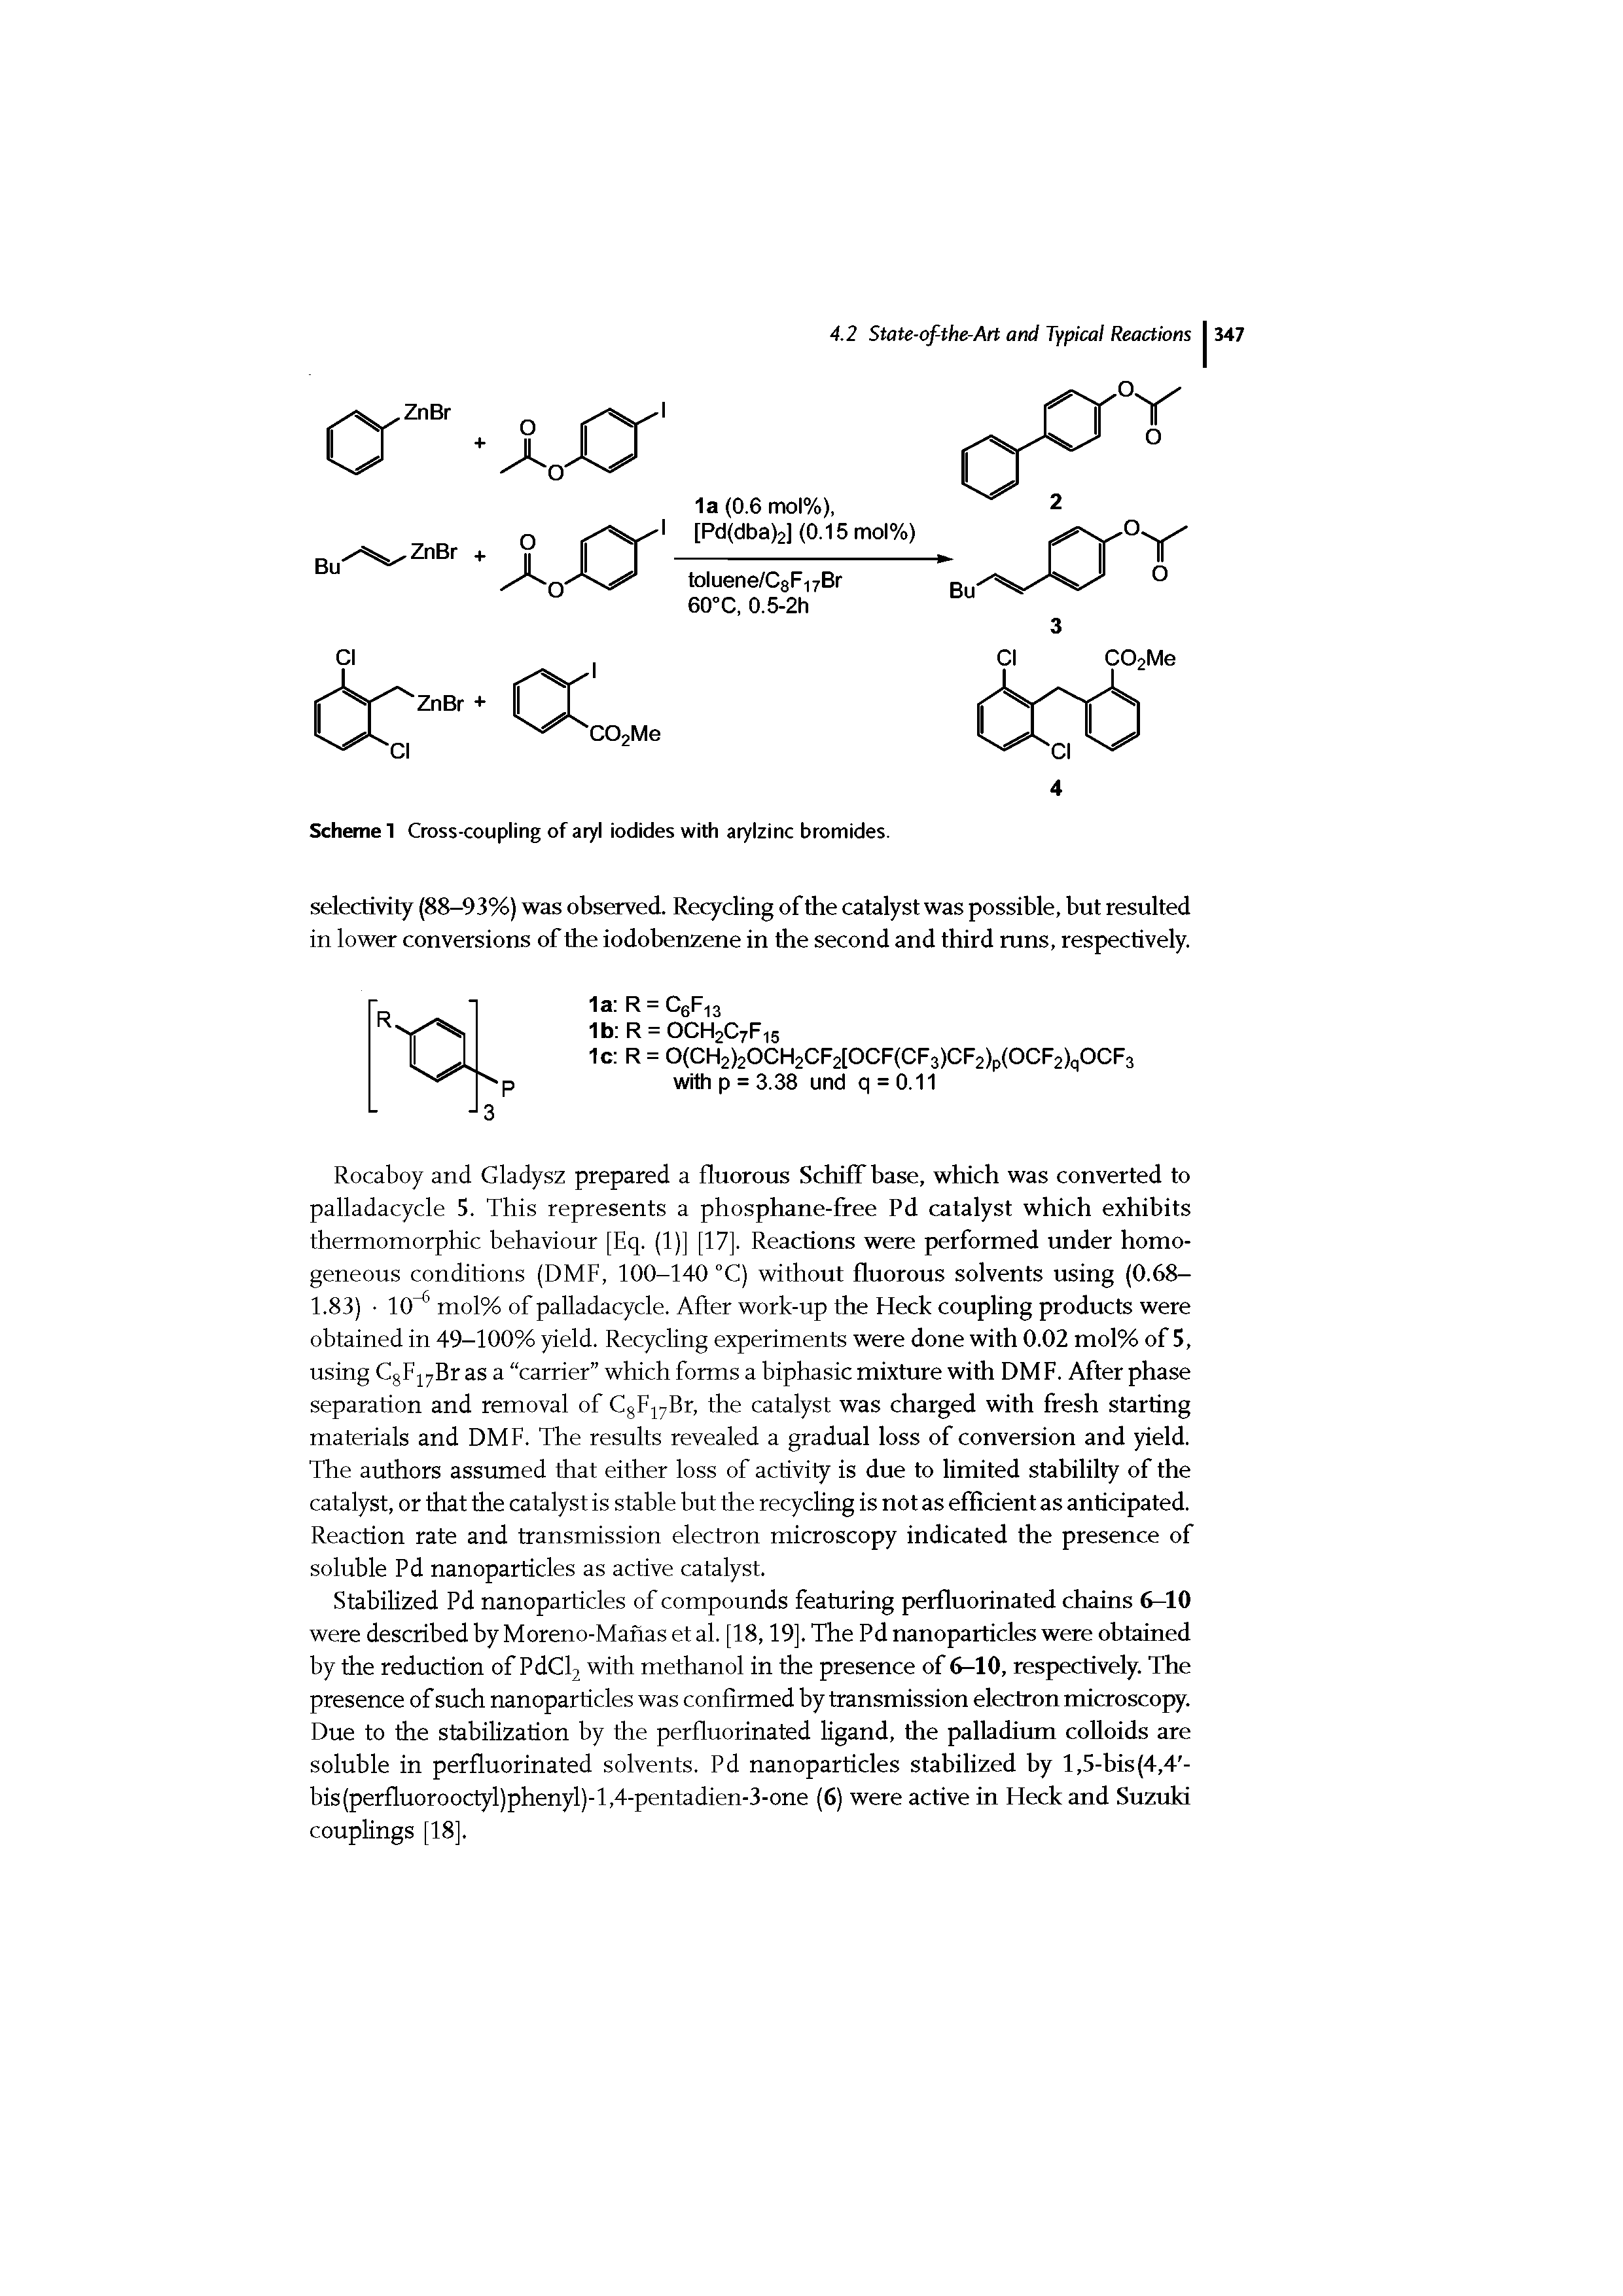 Scheme 1 Cross-coupling of aryl iodides with arylzinc bromides.